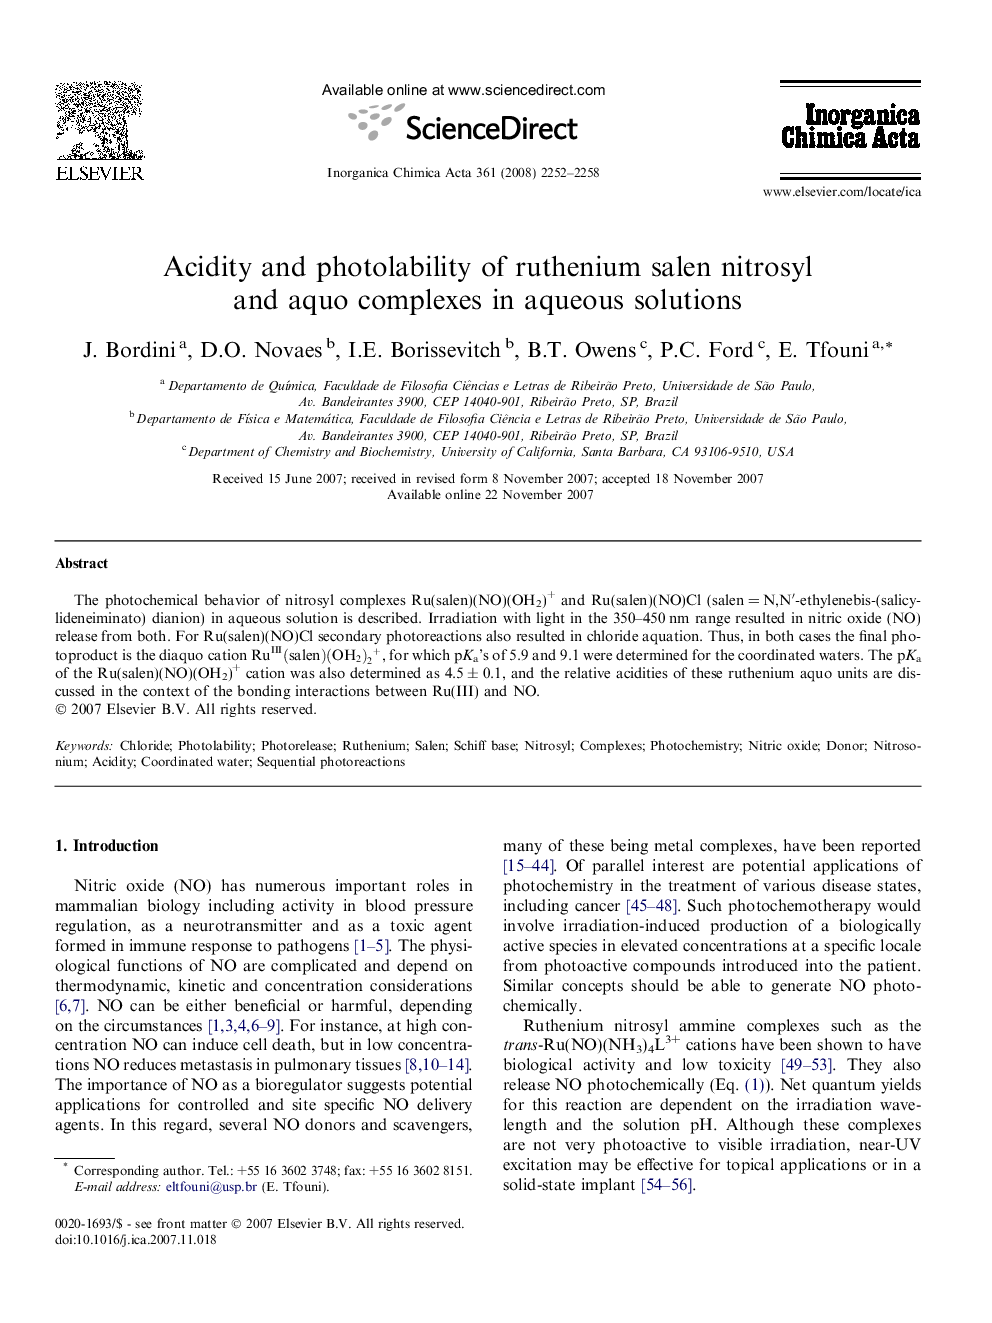 Acidity and photolability of ruthenium salen nitrosyl and aquo complexes in aqueous solutions